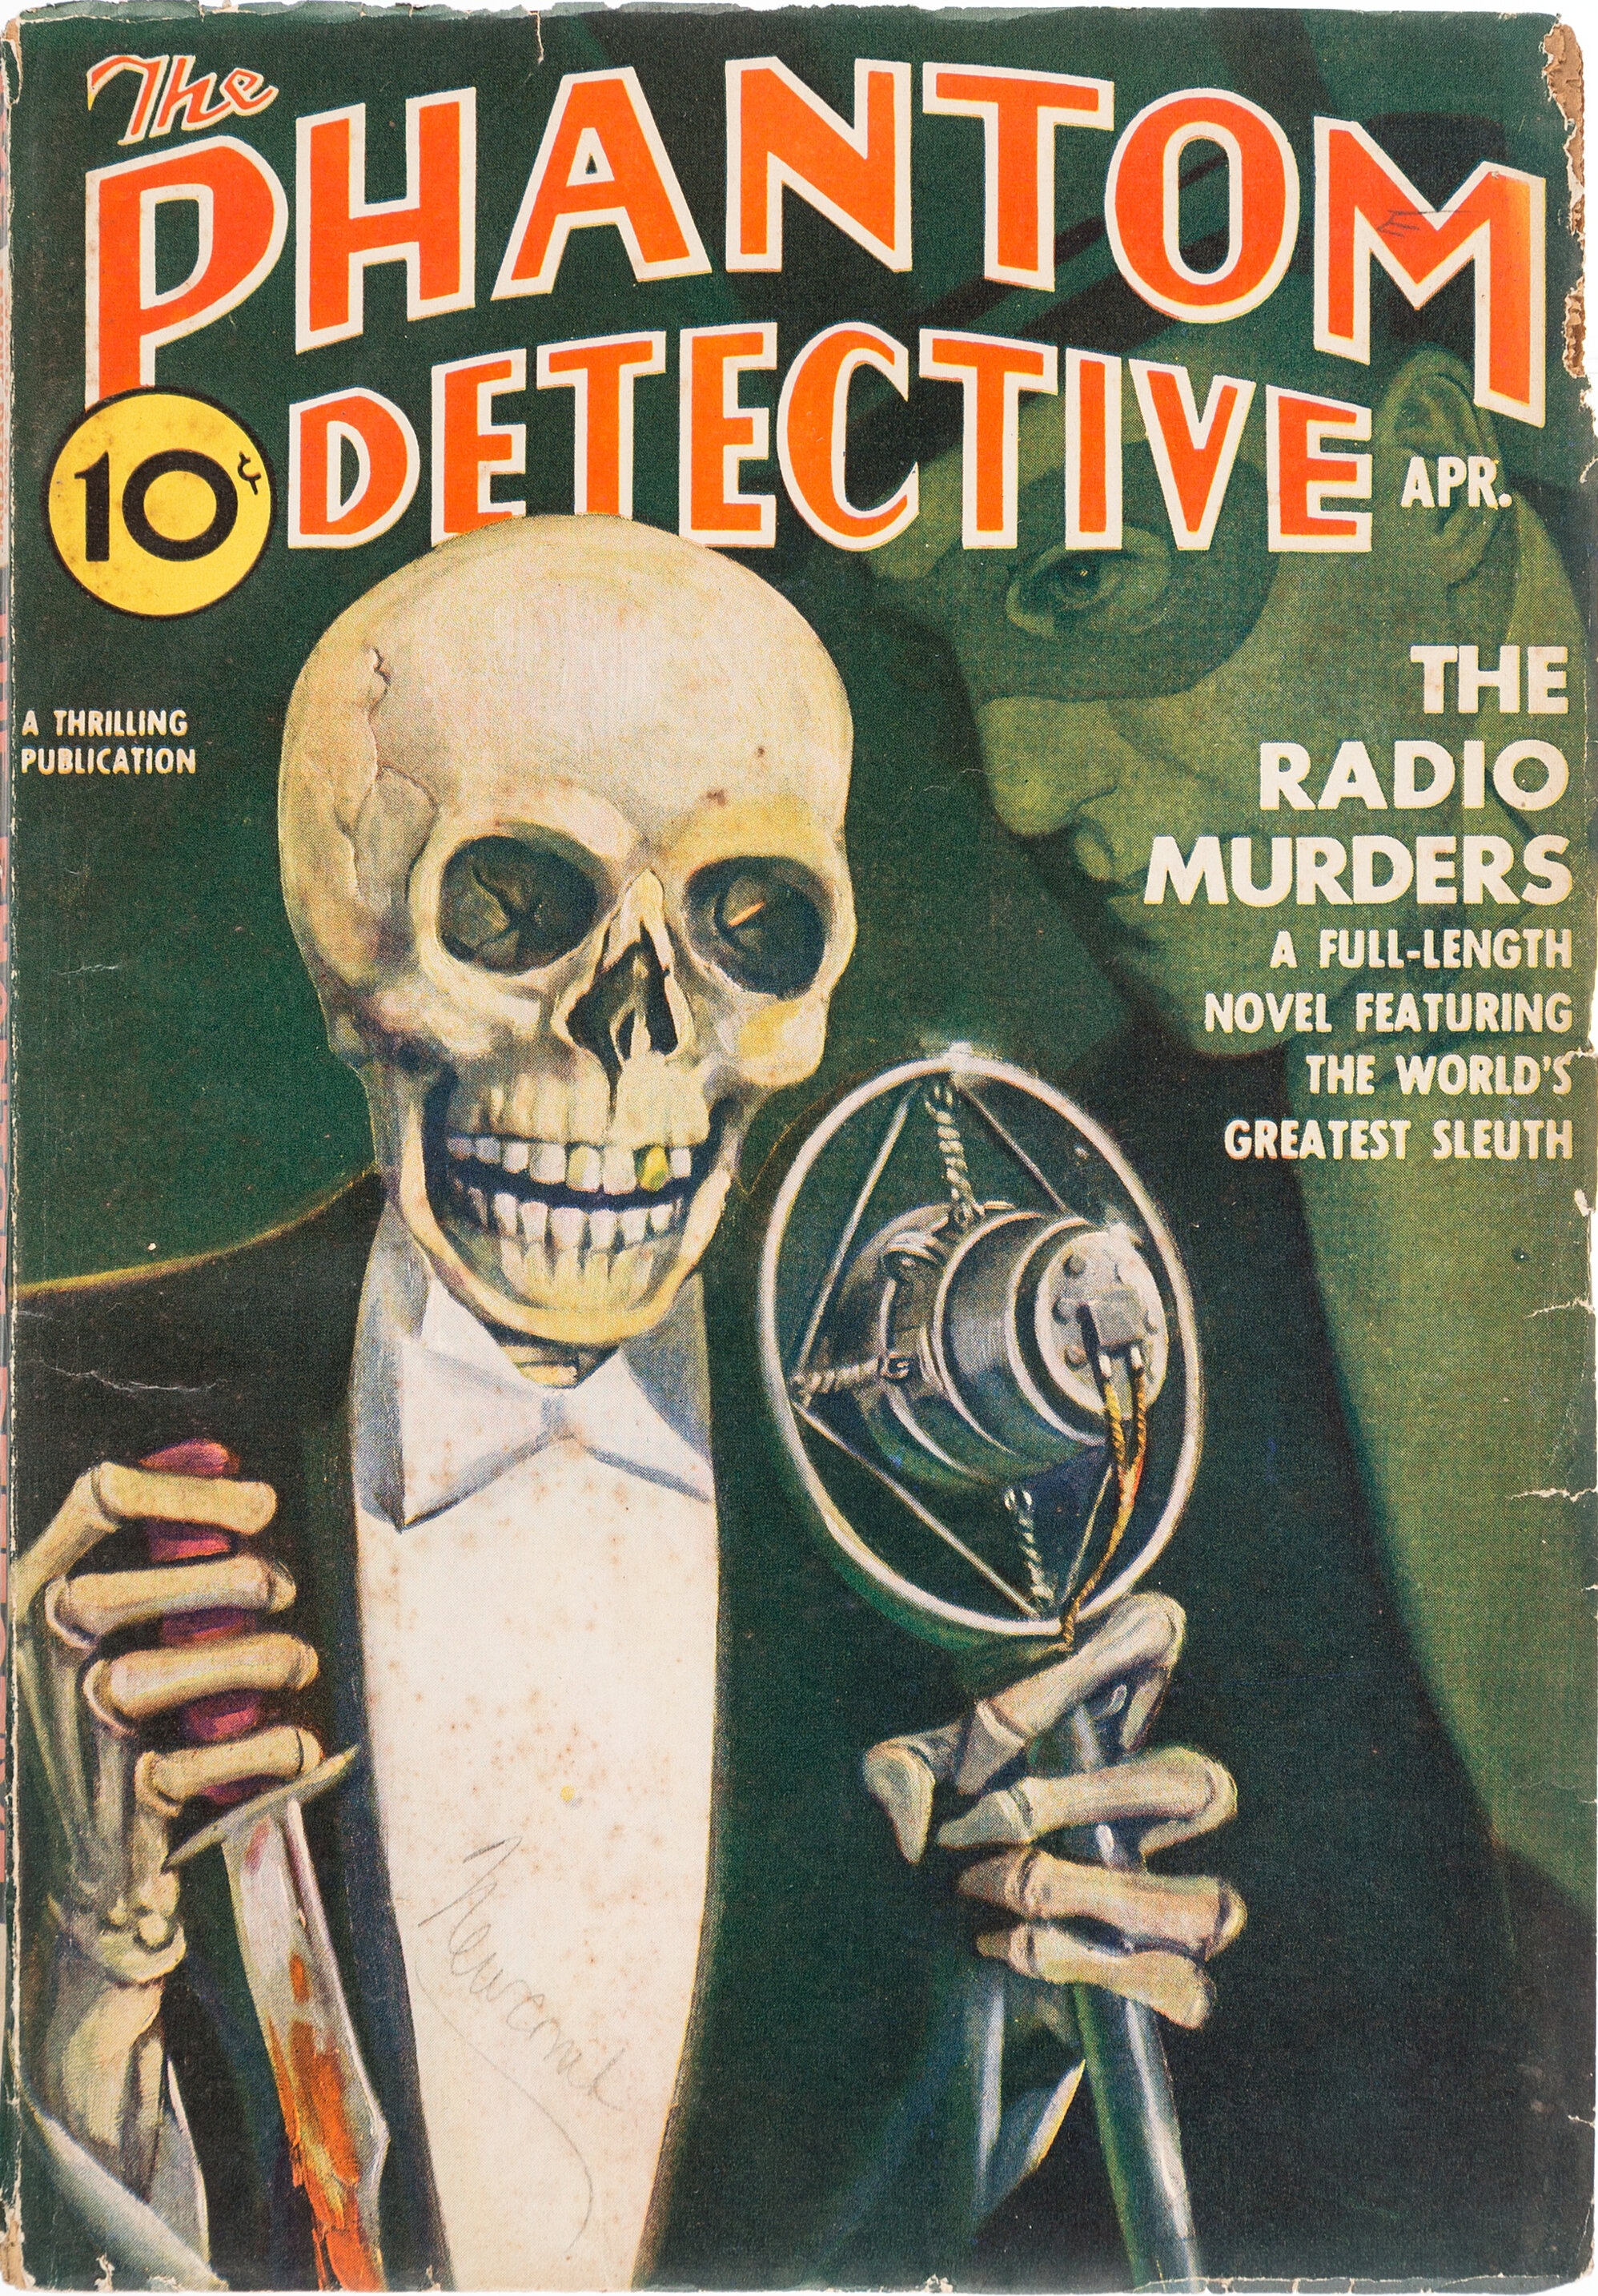 The Phantom Detective - April 1939